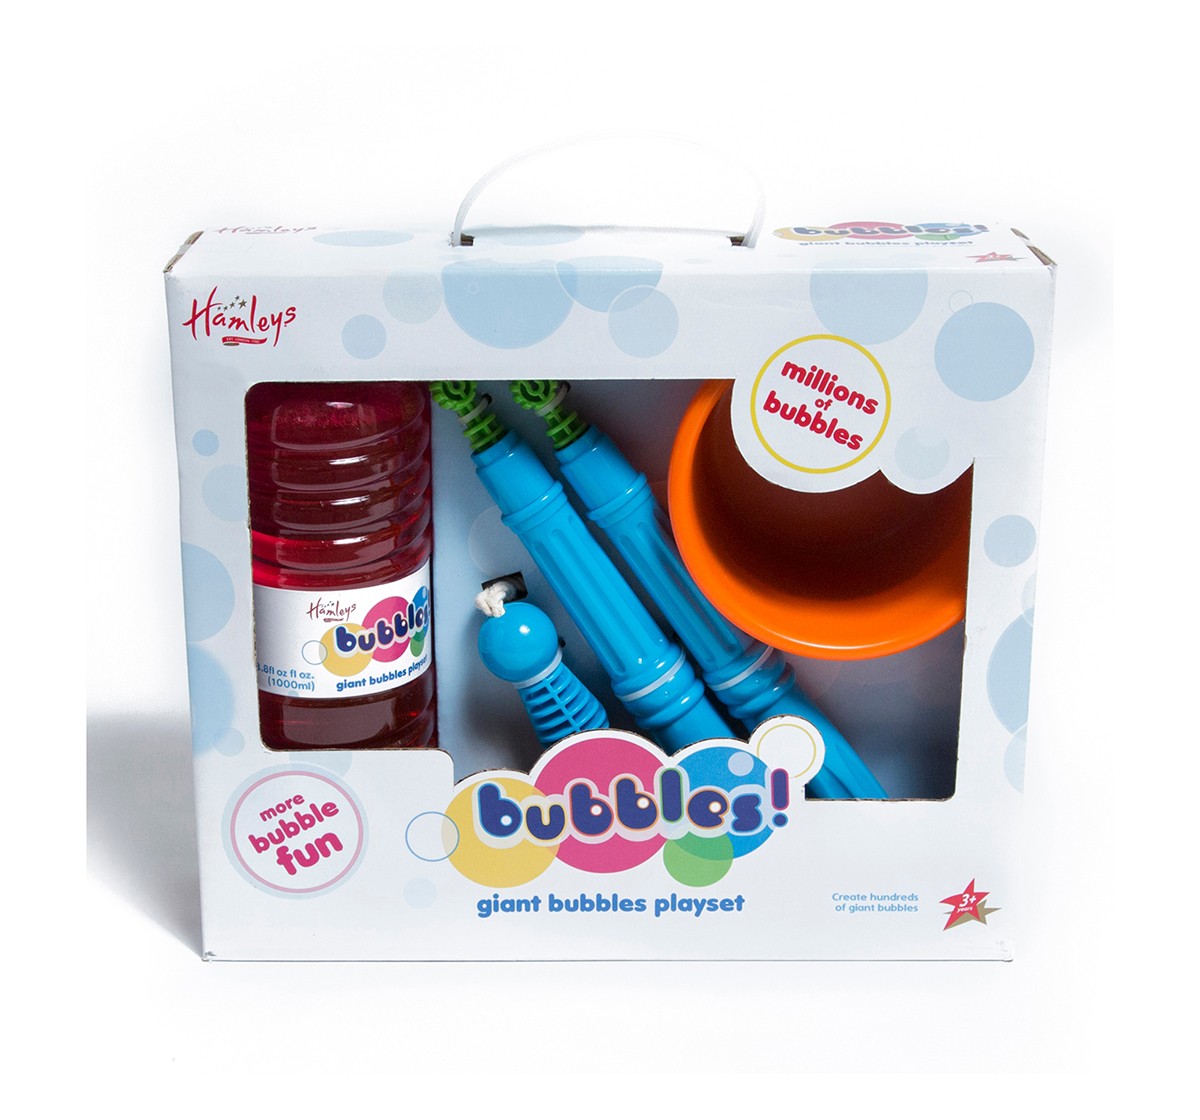 Hamleys Giant Bubble Play Set Impulse Toys for Kids age 3Y+ 